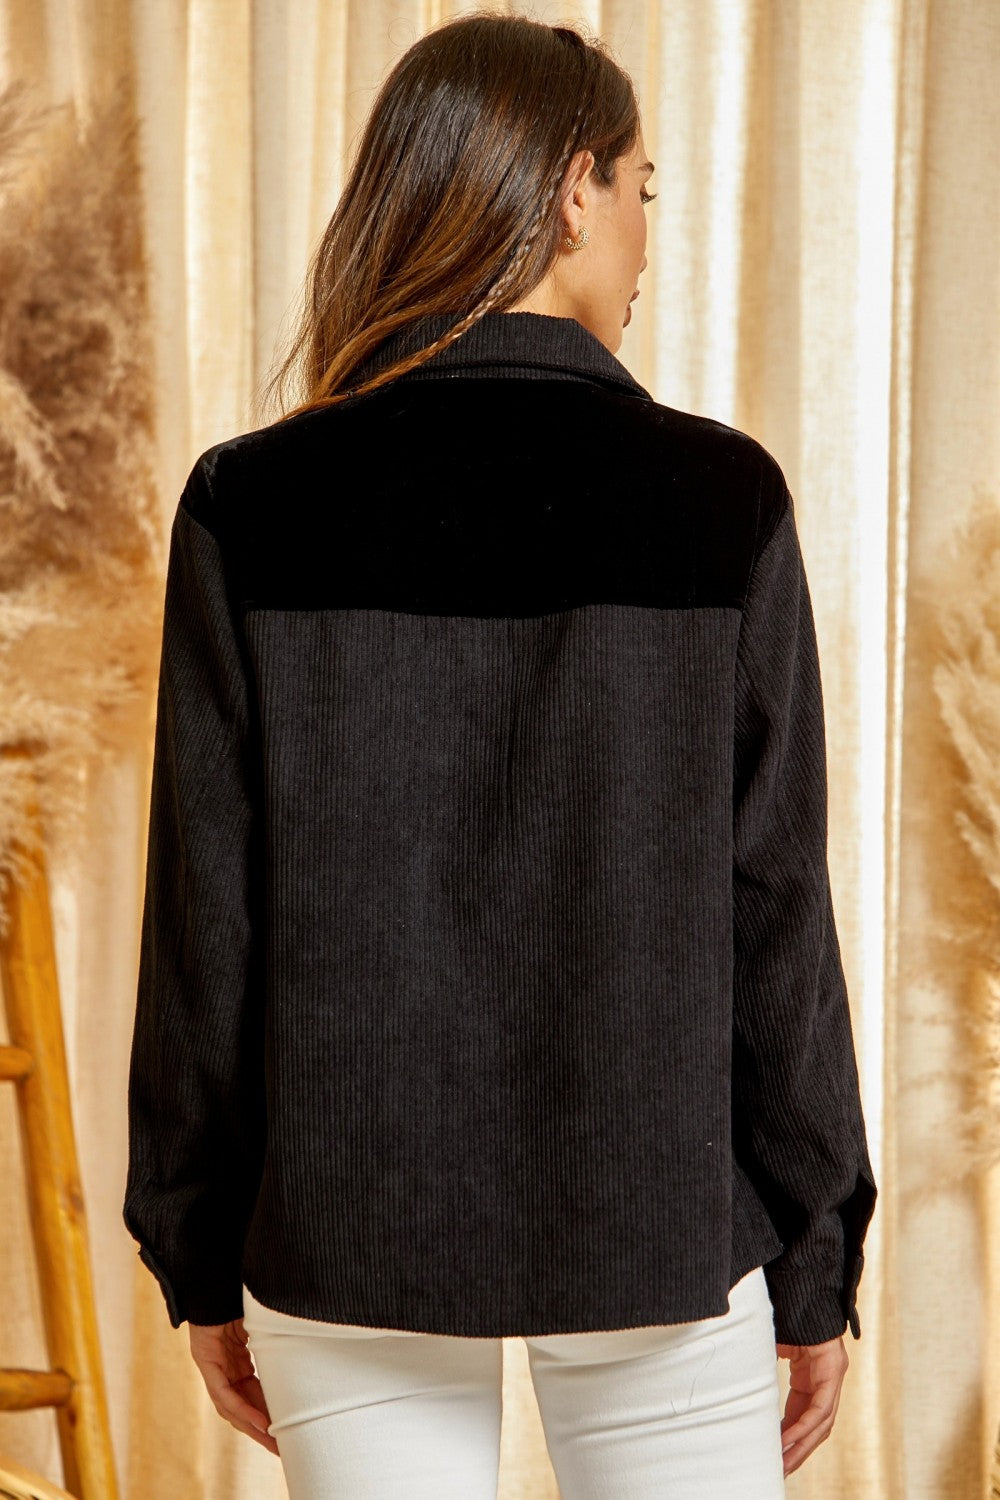 Black Corduroy Shirt/Jacket w/ Embroidery